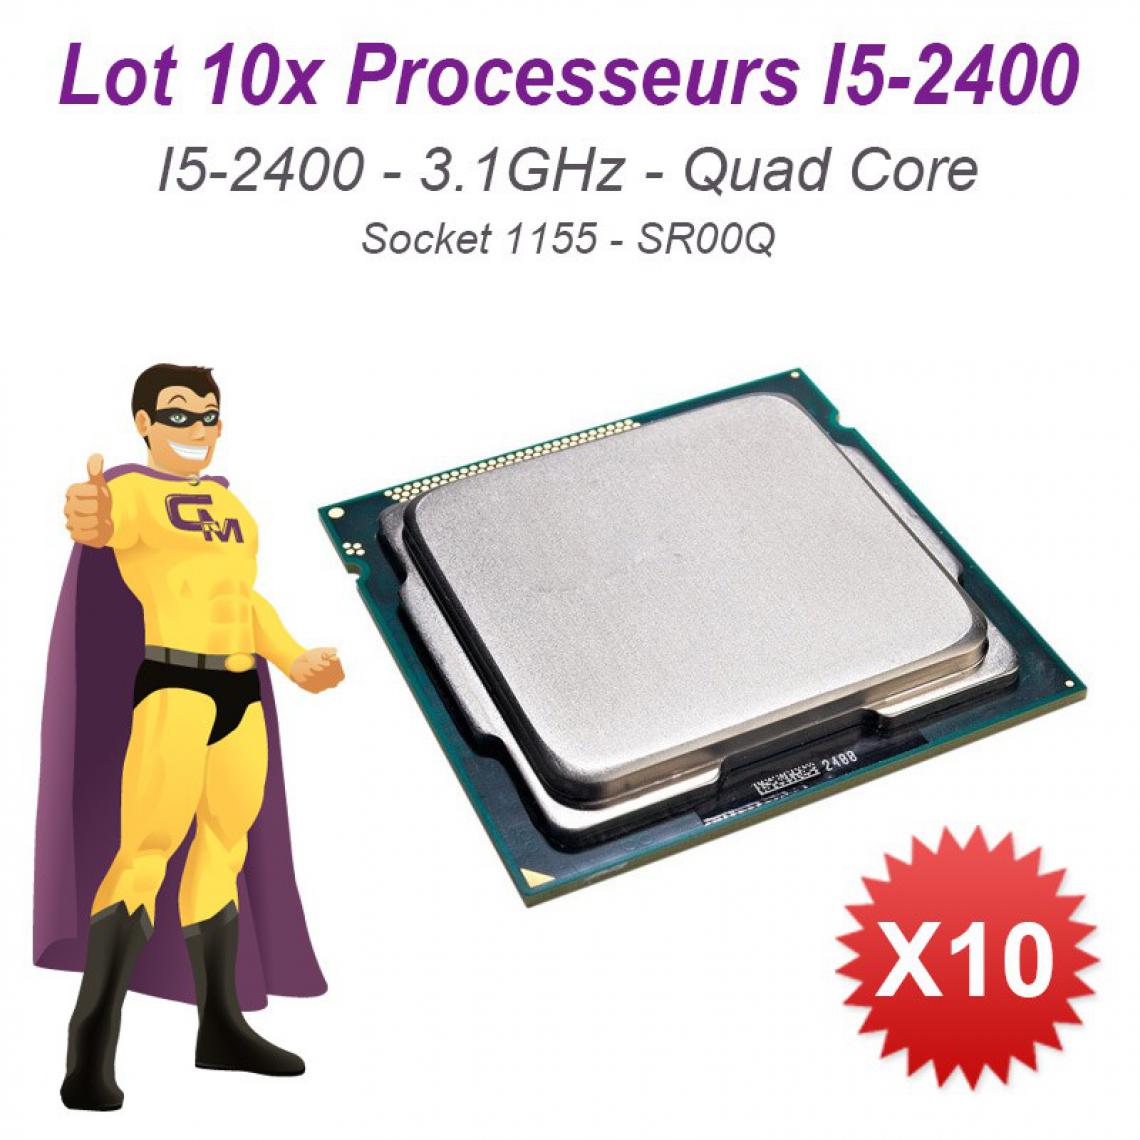 Intel - Lot x10 Processeurs CPU Intel I5-2400 Quad Core 3.1Ghz Socket LGA1155 SR00Q - Processeur INTEL